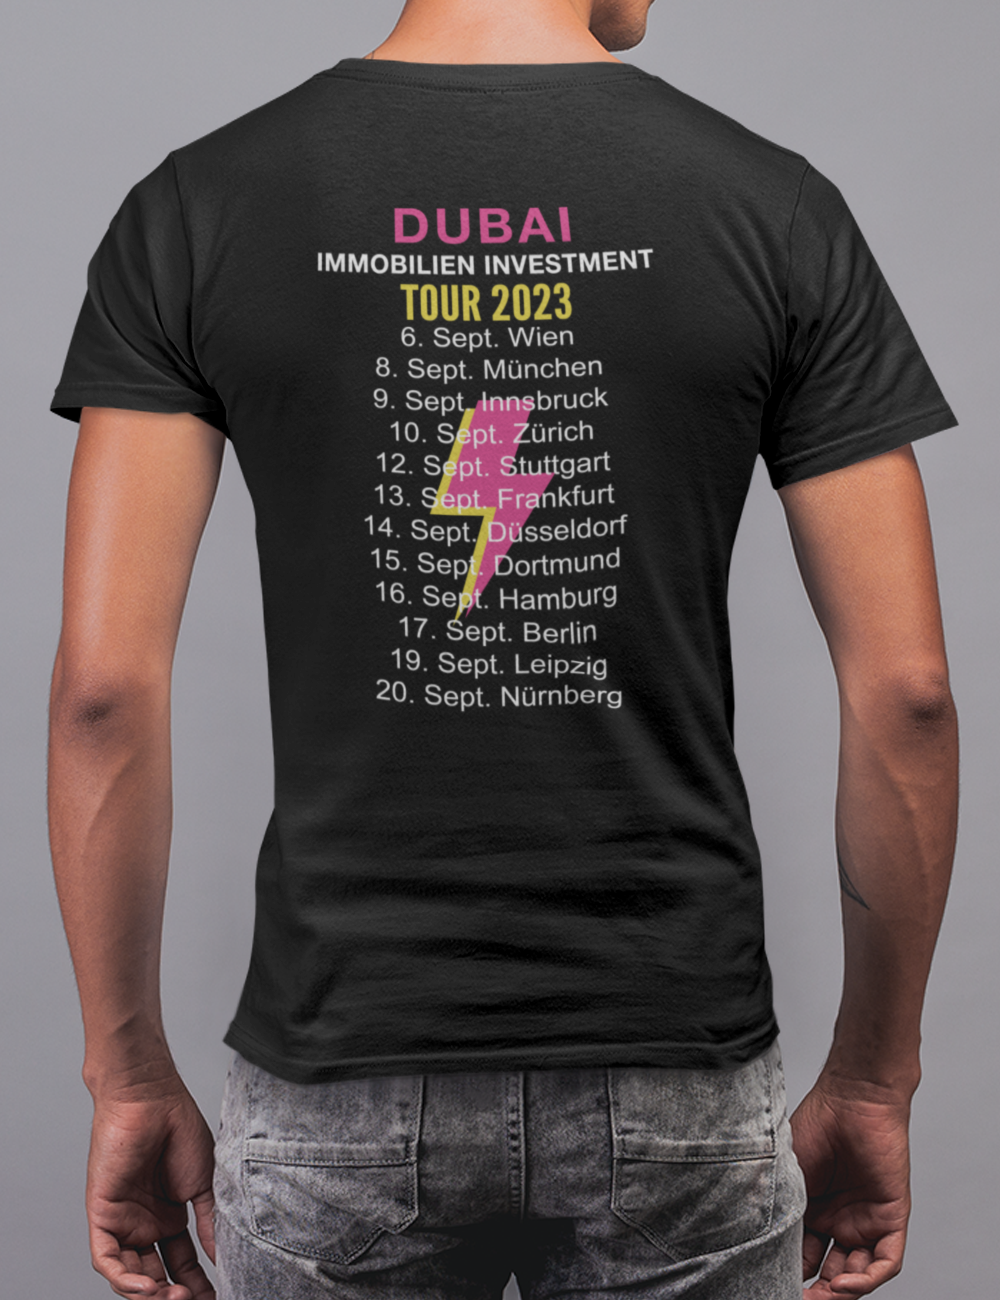 "TEAM DG Flash Investment Tour 2023" - Shirt Unisex